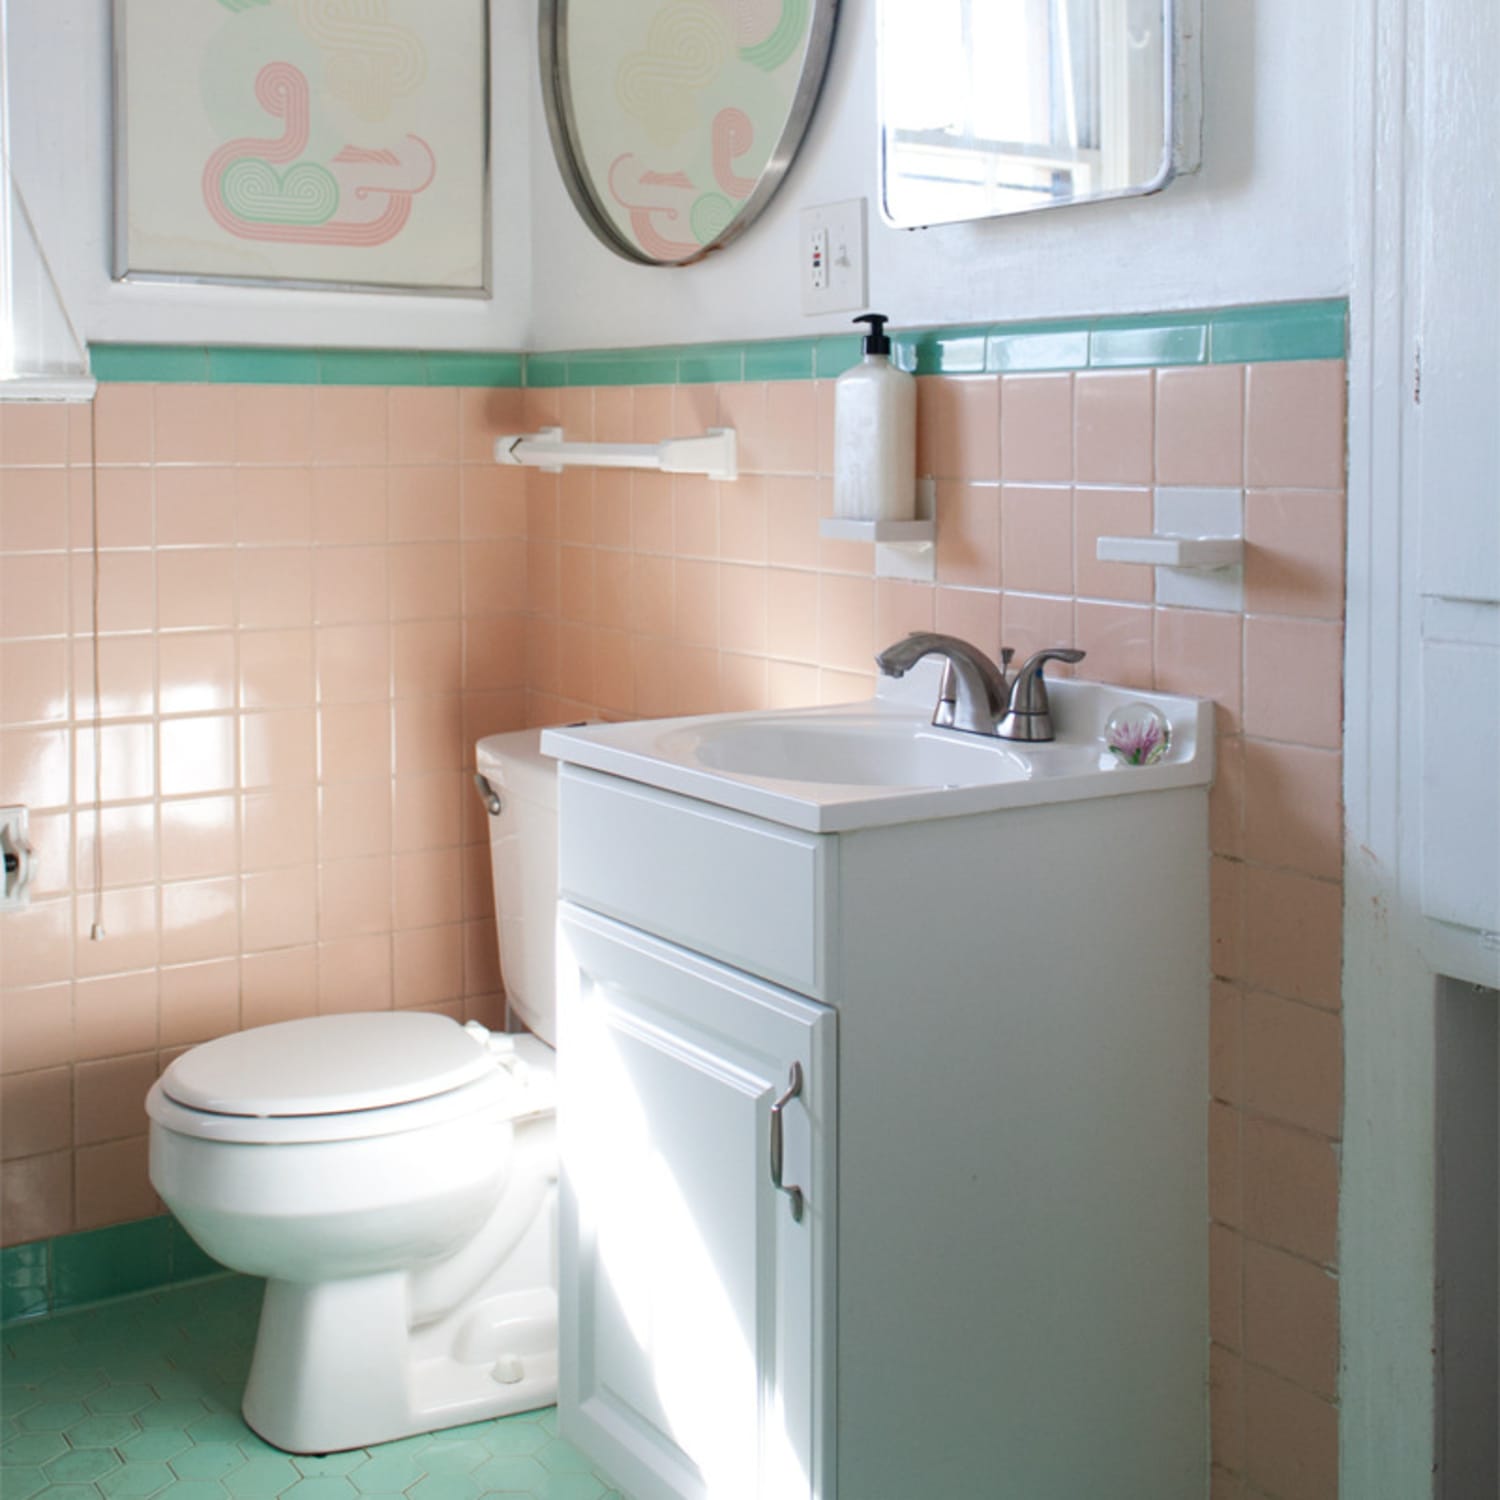 15 Small Bathroom Ideas - This Old House